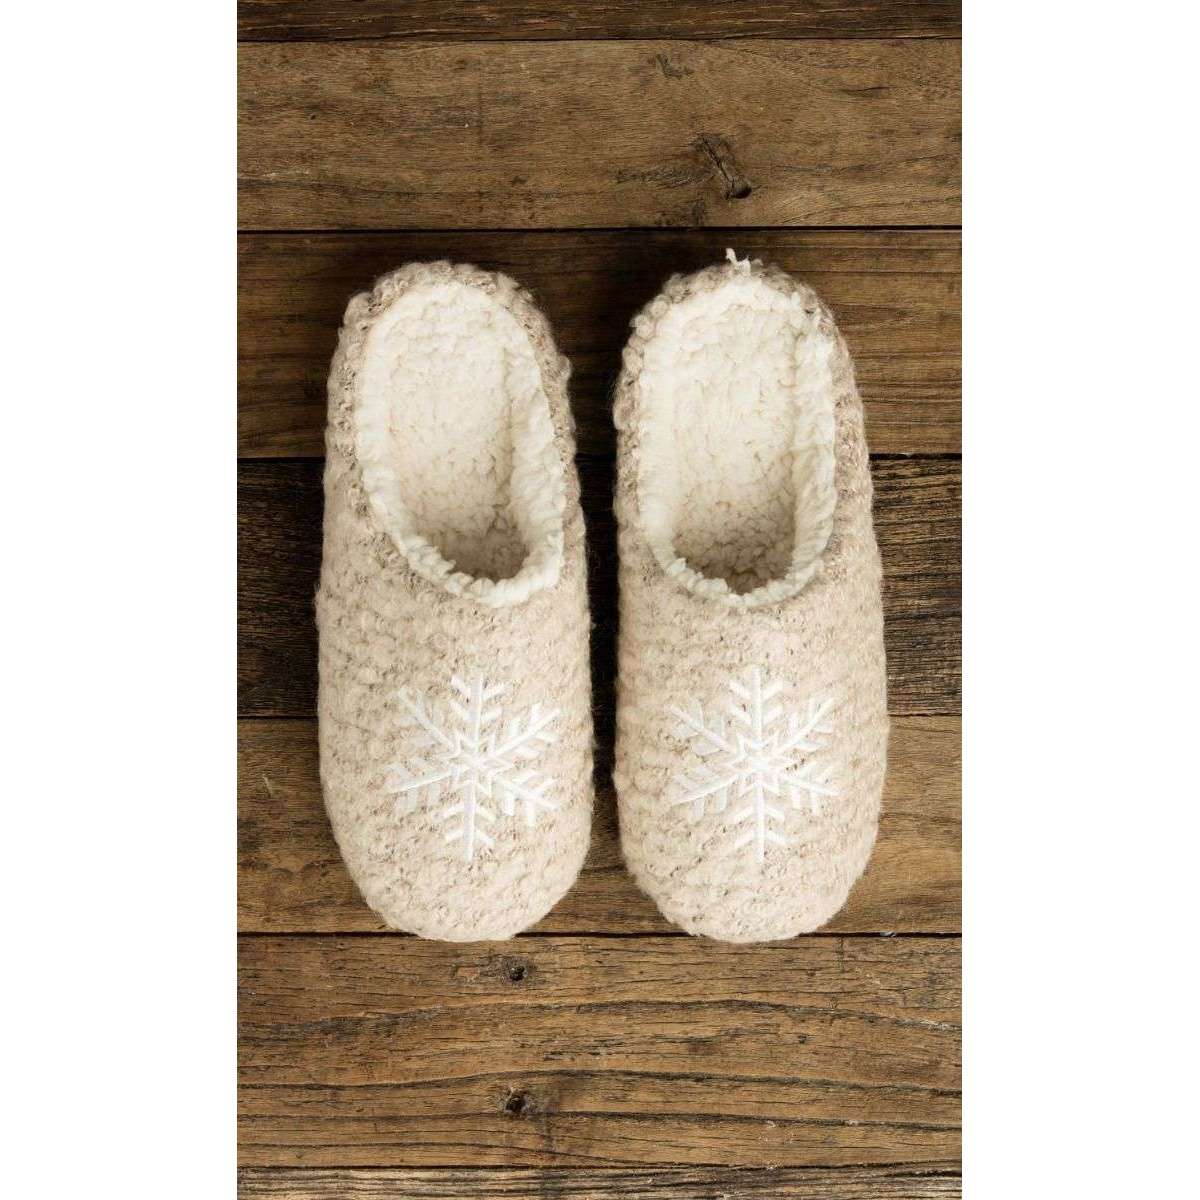 moonbeam slippers